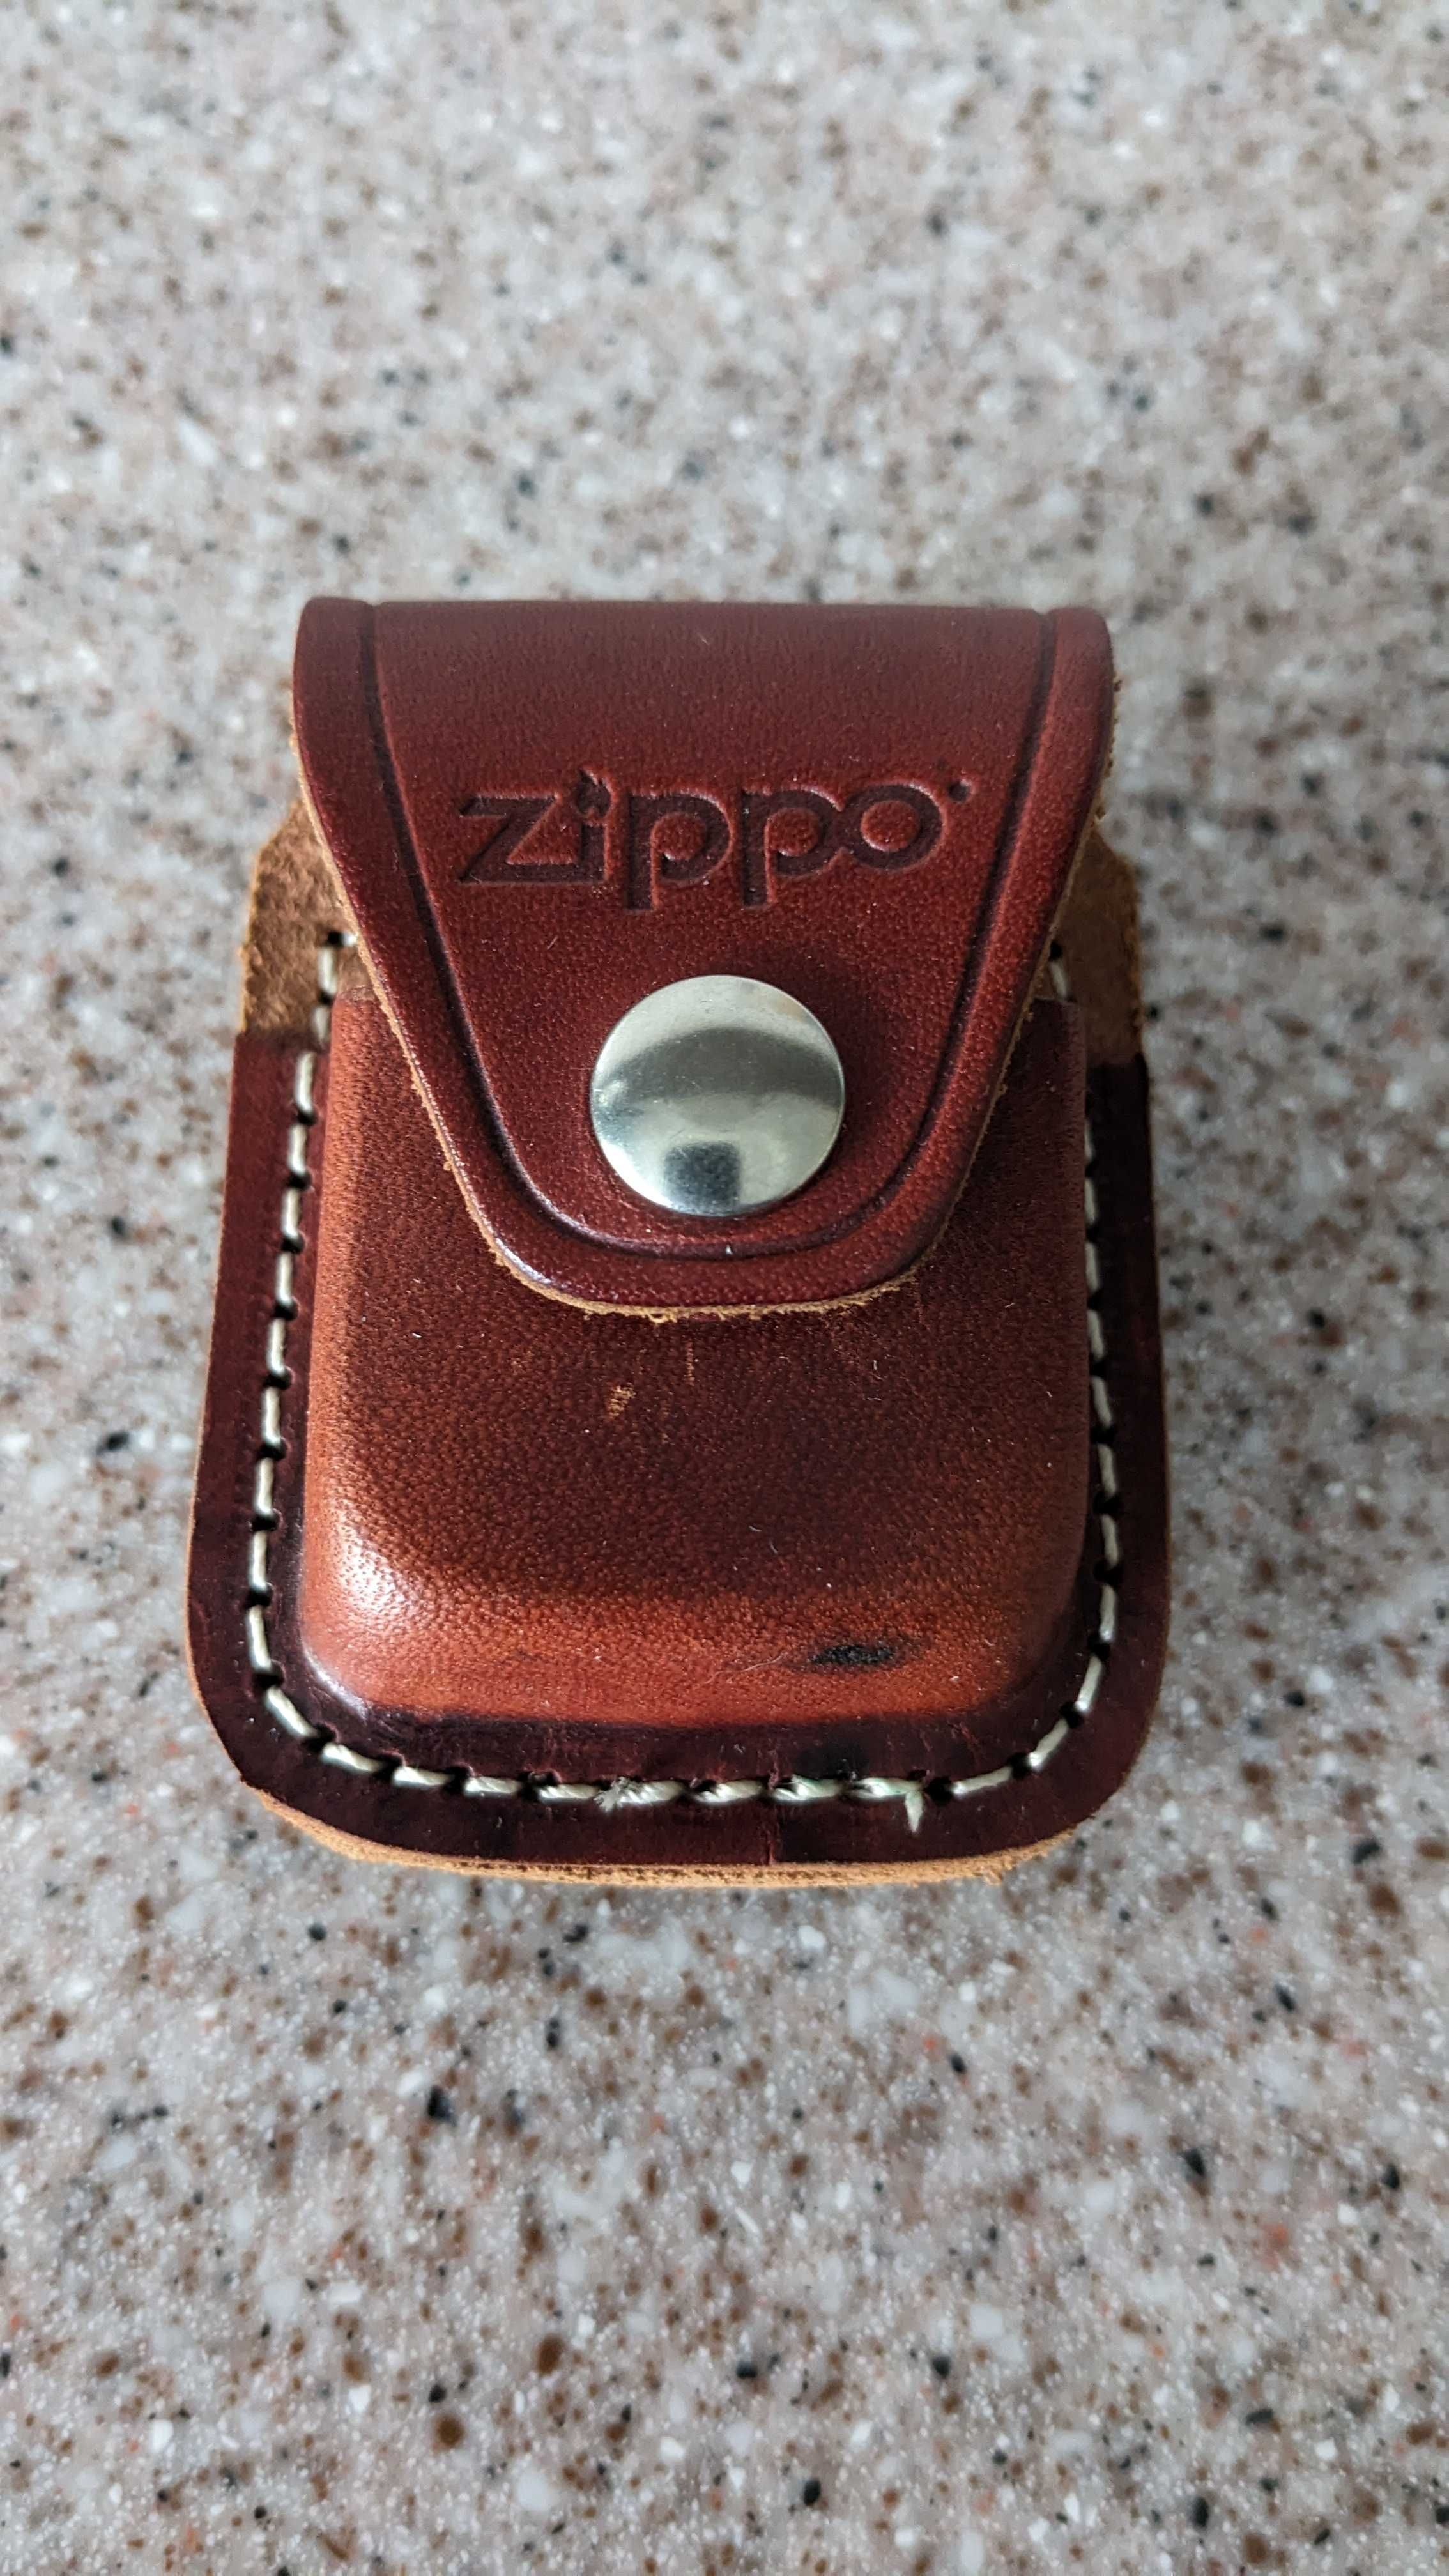 Чехол Zippo с клипсой USA, оригинал.